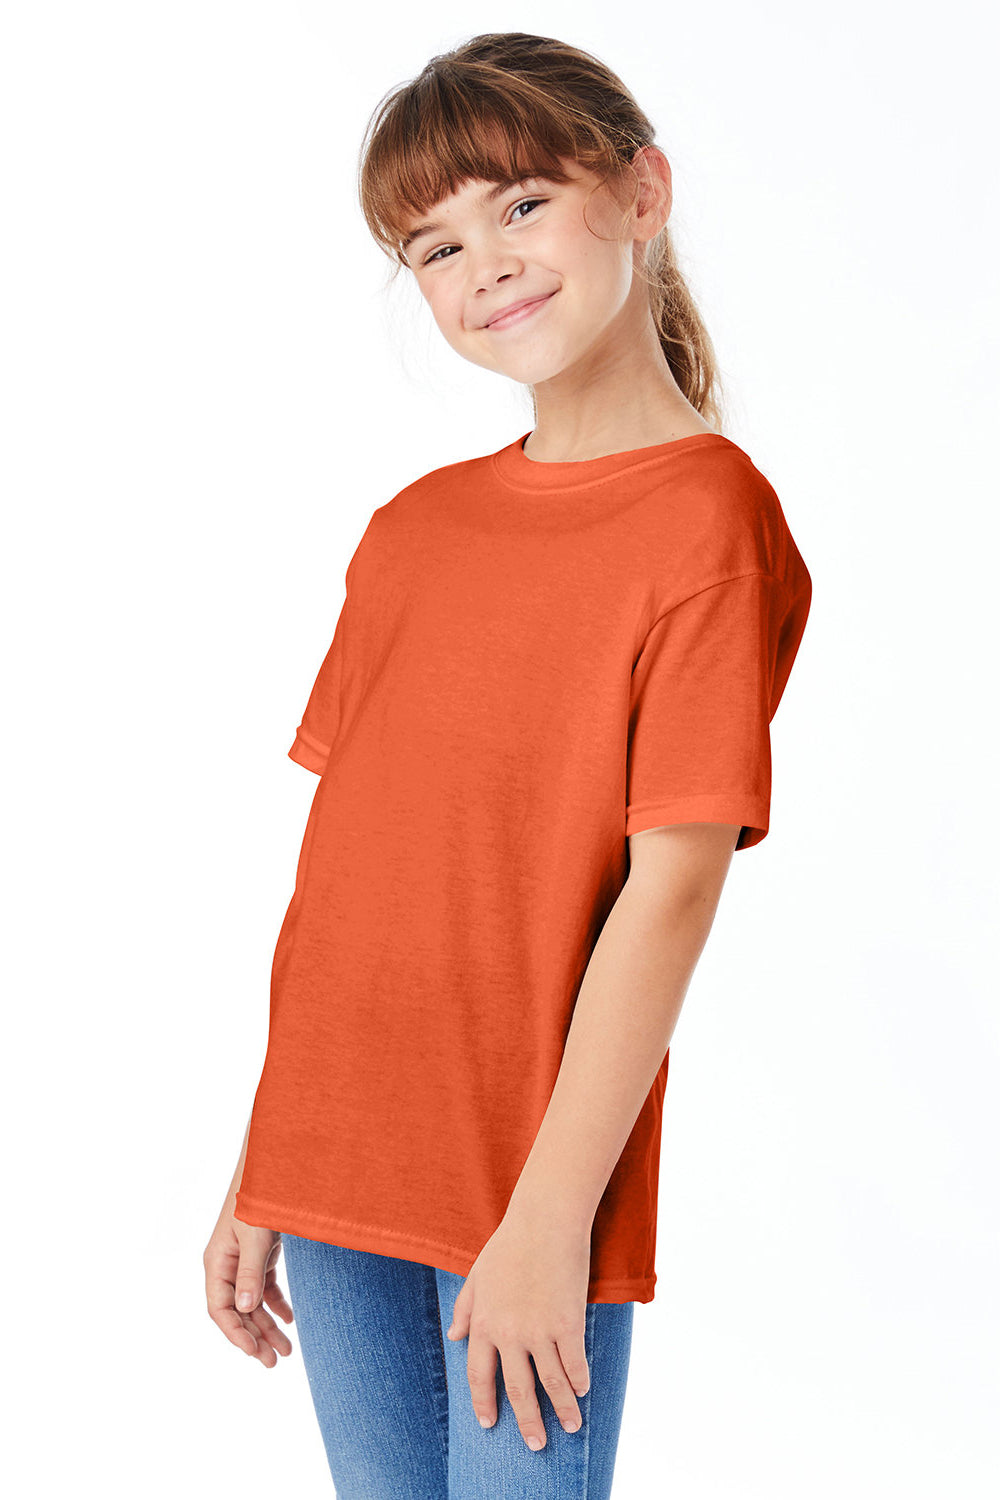 Hanes 5480 Youth ComfortSoft Short Sleeve Crewneck T-Shirt Texas Orange 3Q